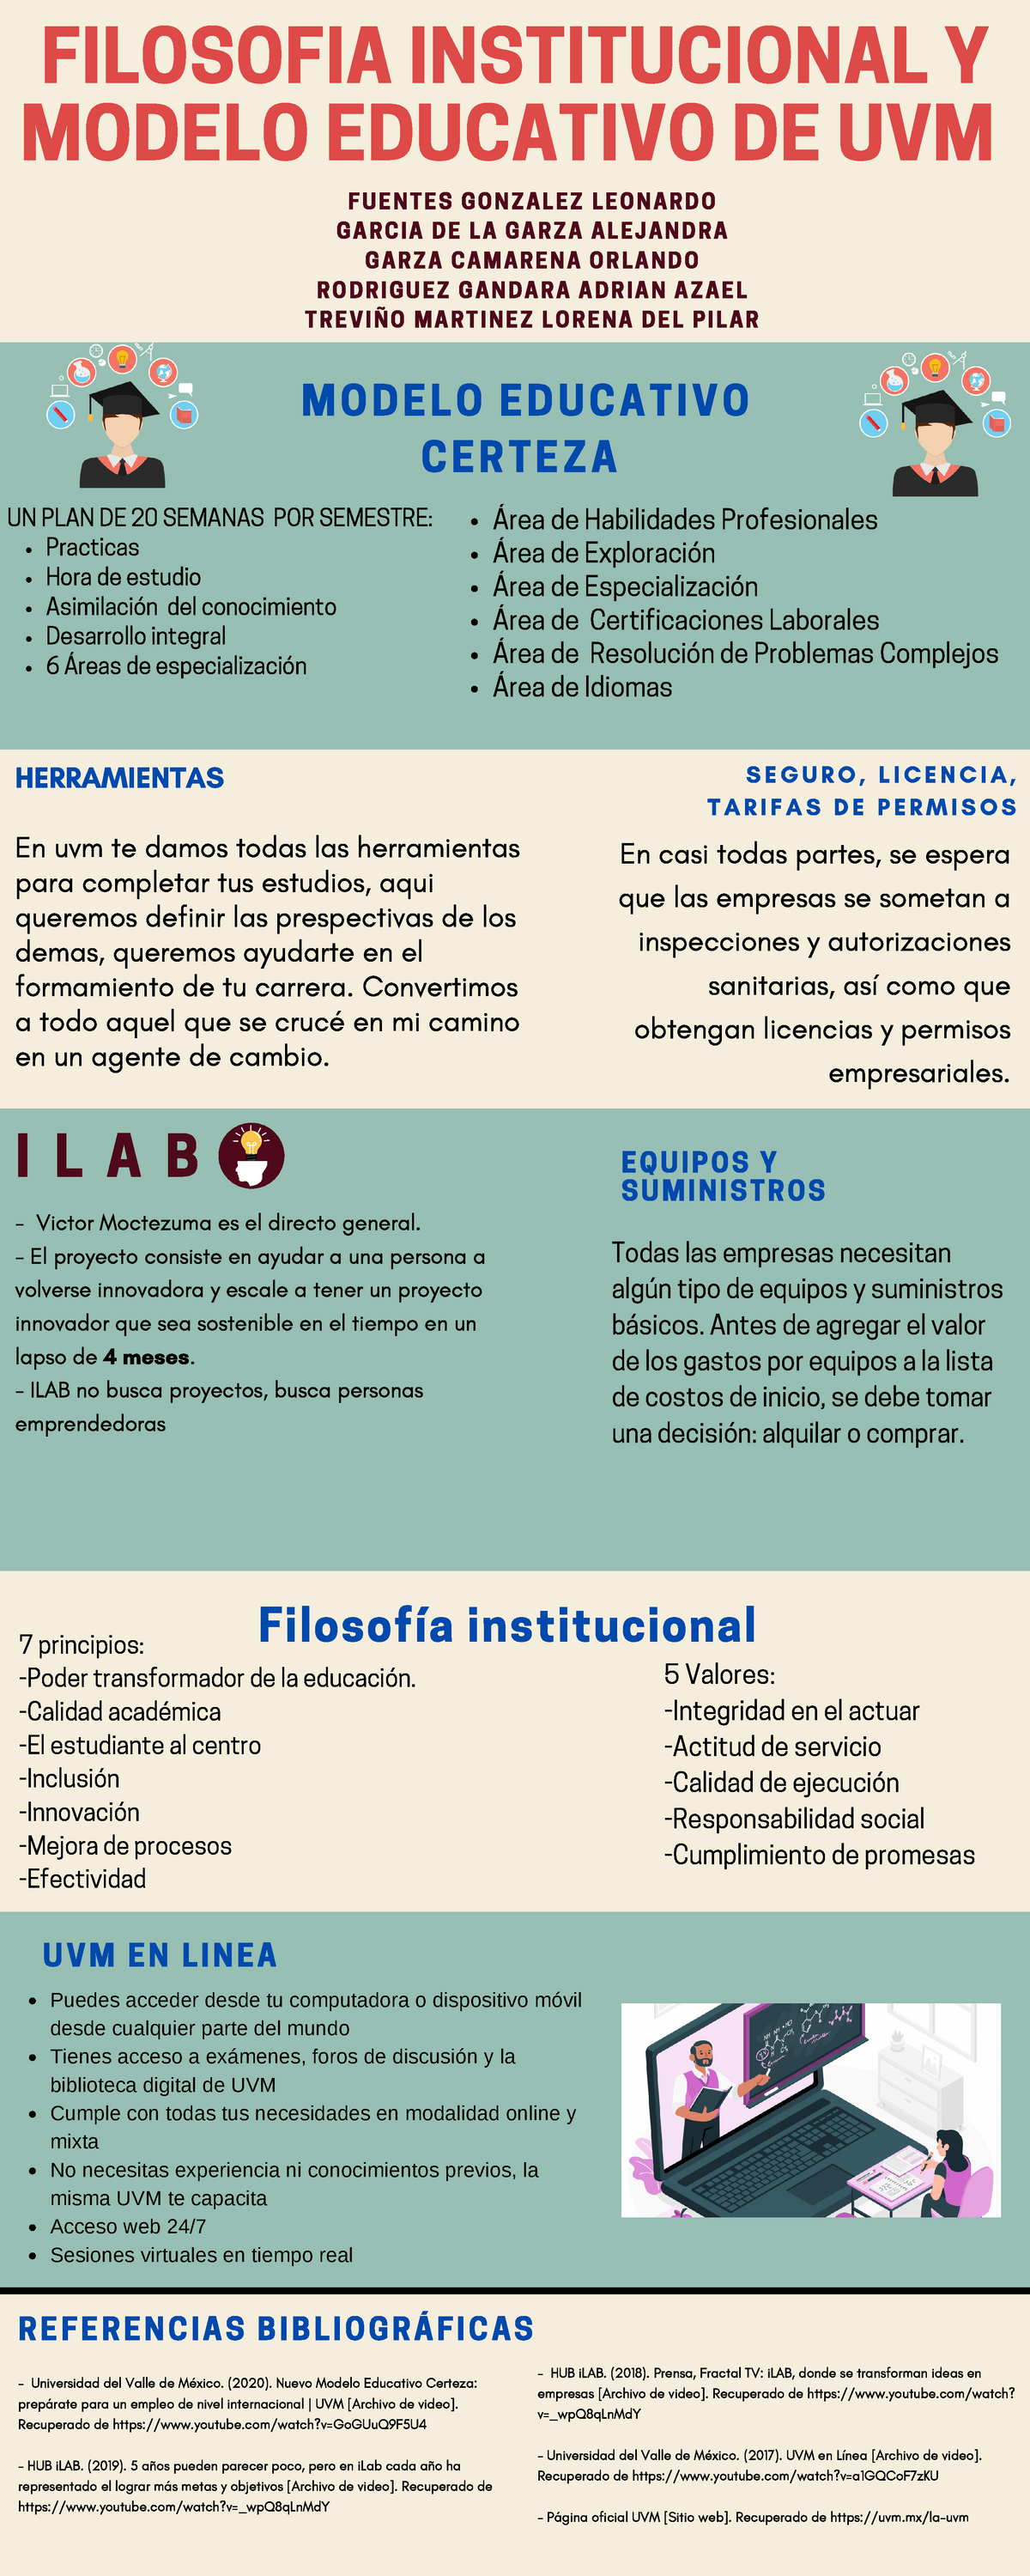 A2 E1 Infografia Universidad del Valle de Mexico - MODELO EDUCATIVO CERTEZA  FILOSOFIA INSTITUCIONAL - Studocu